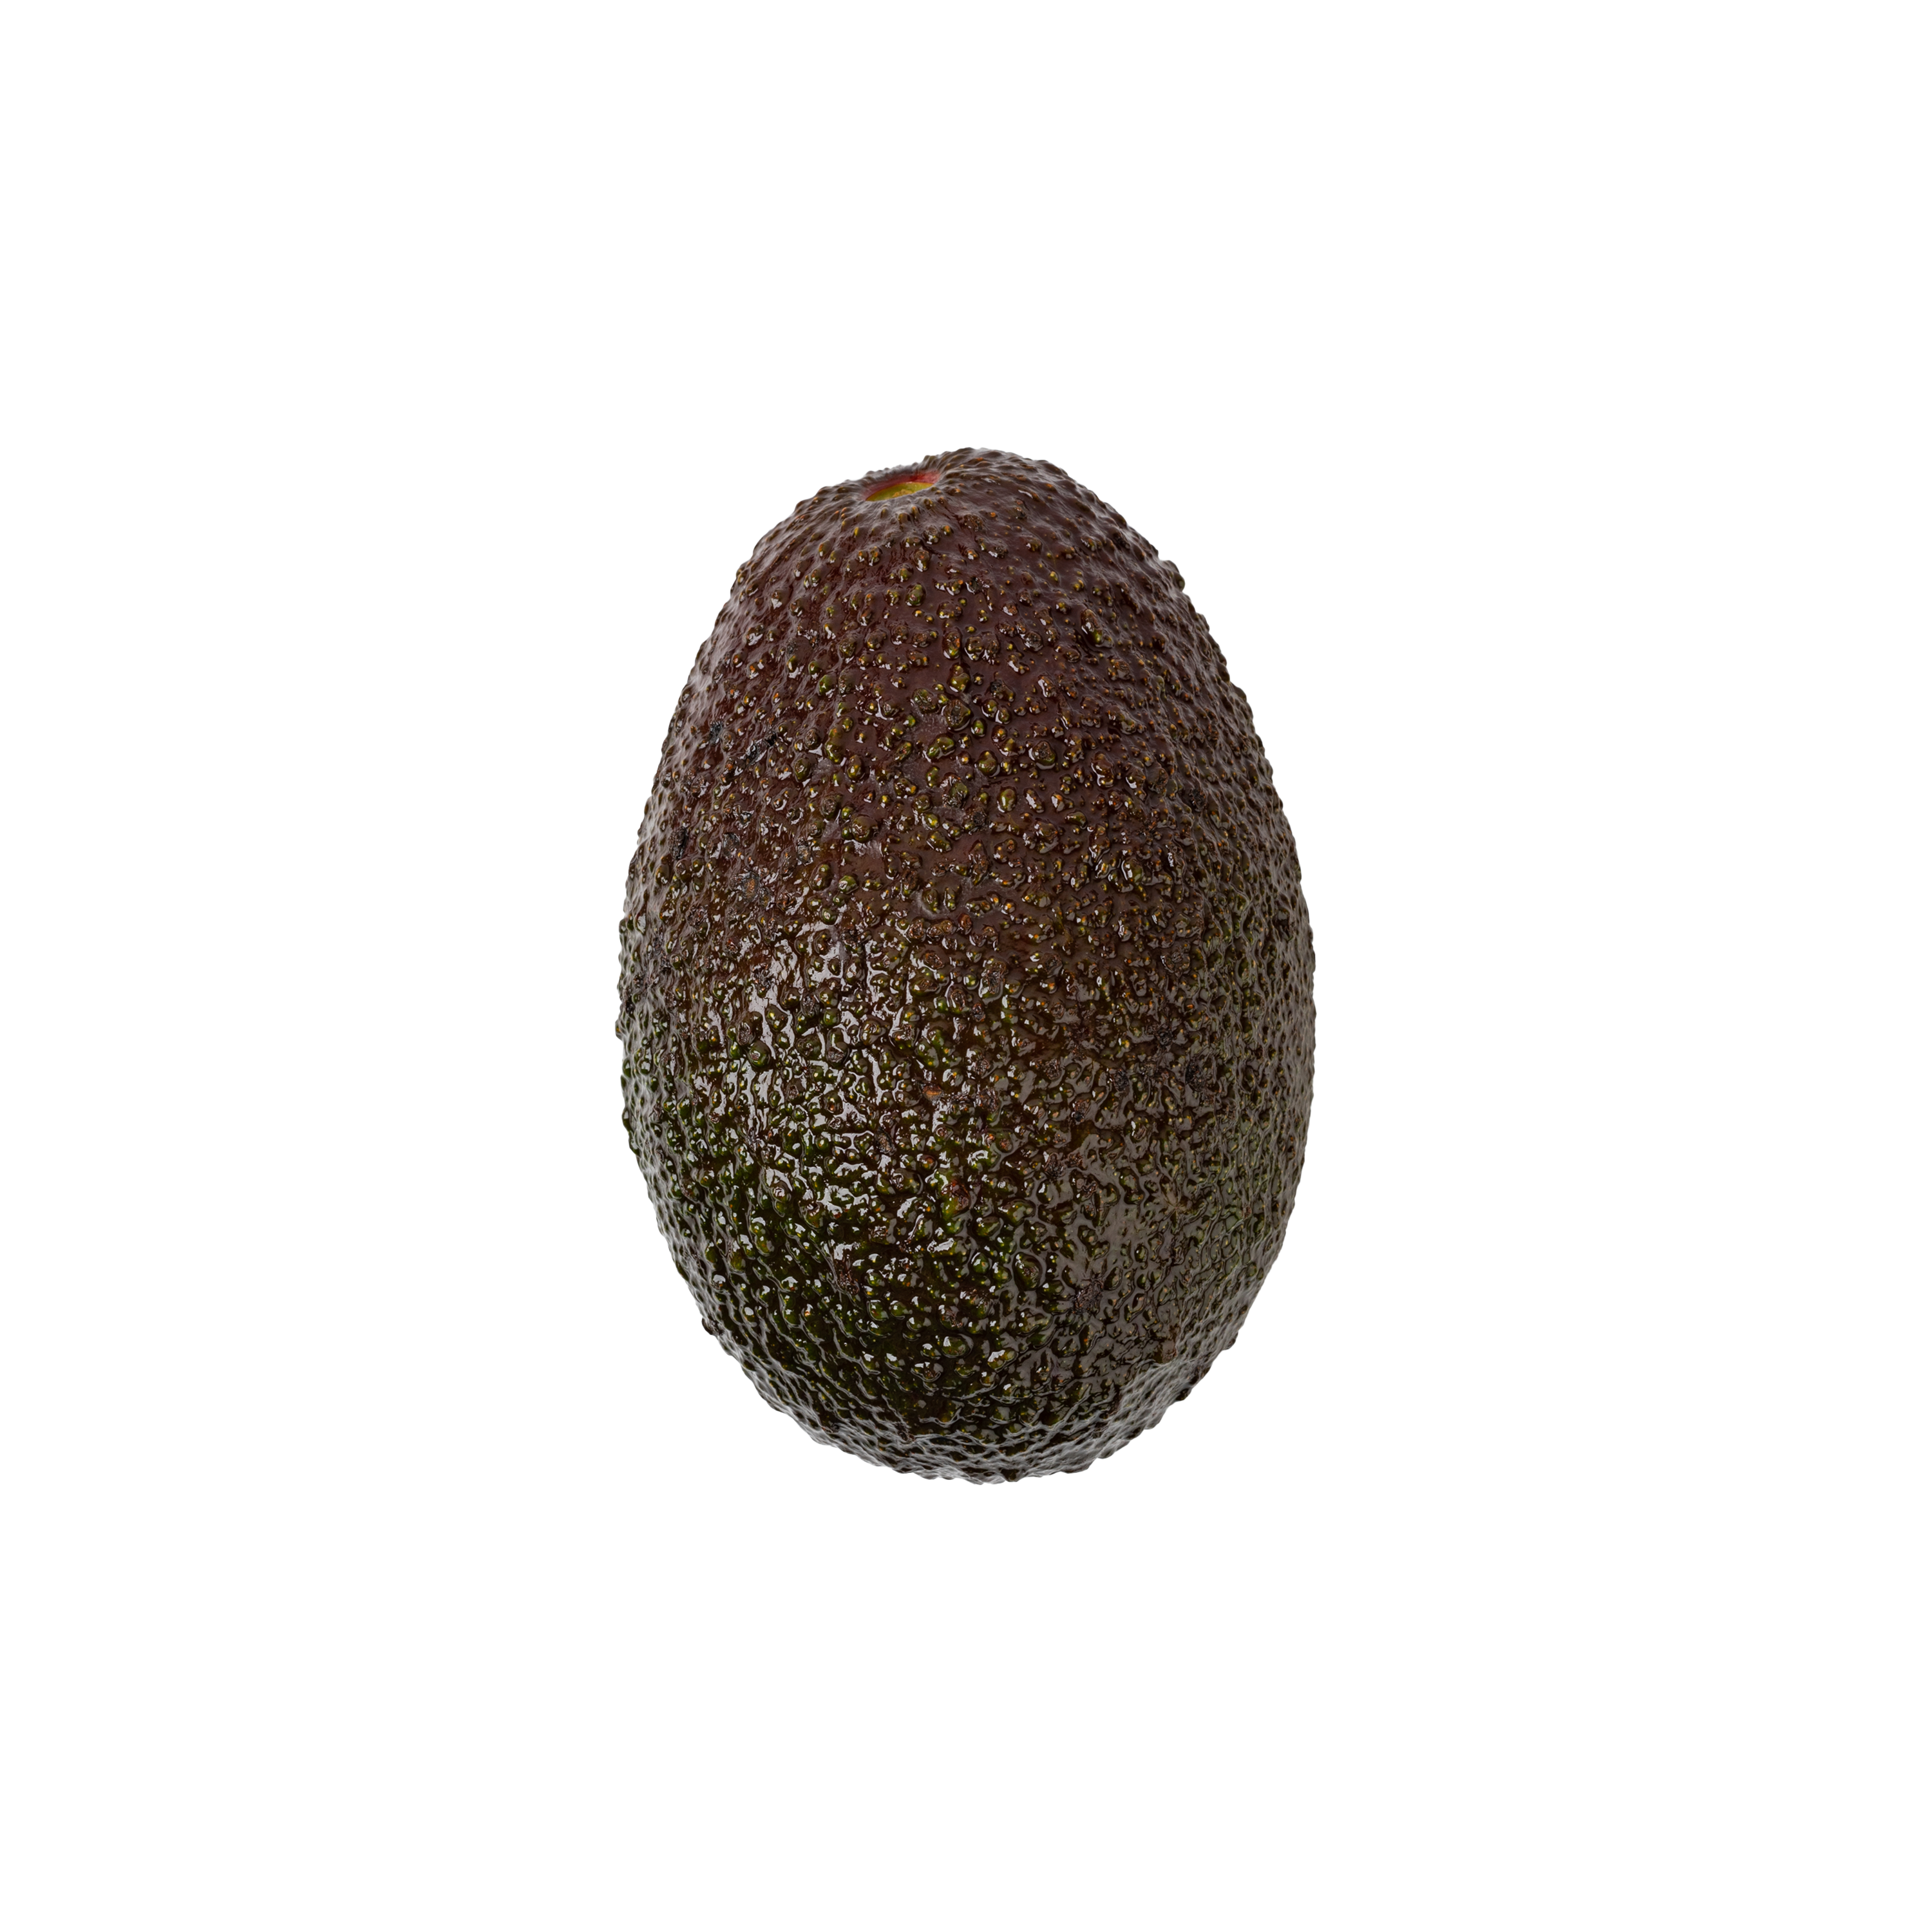 Avocado  1 Count